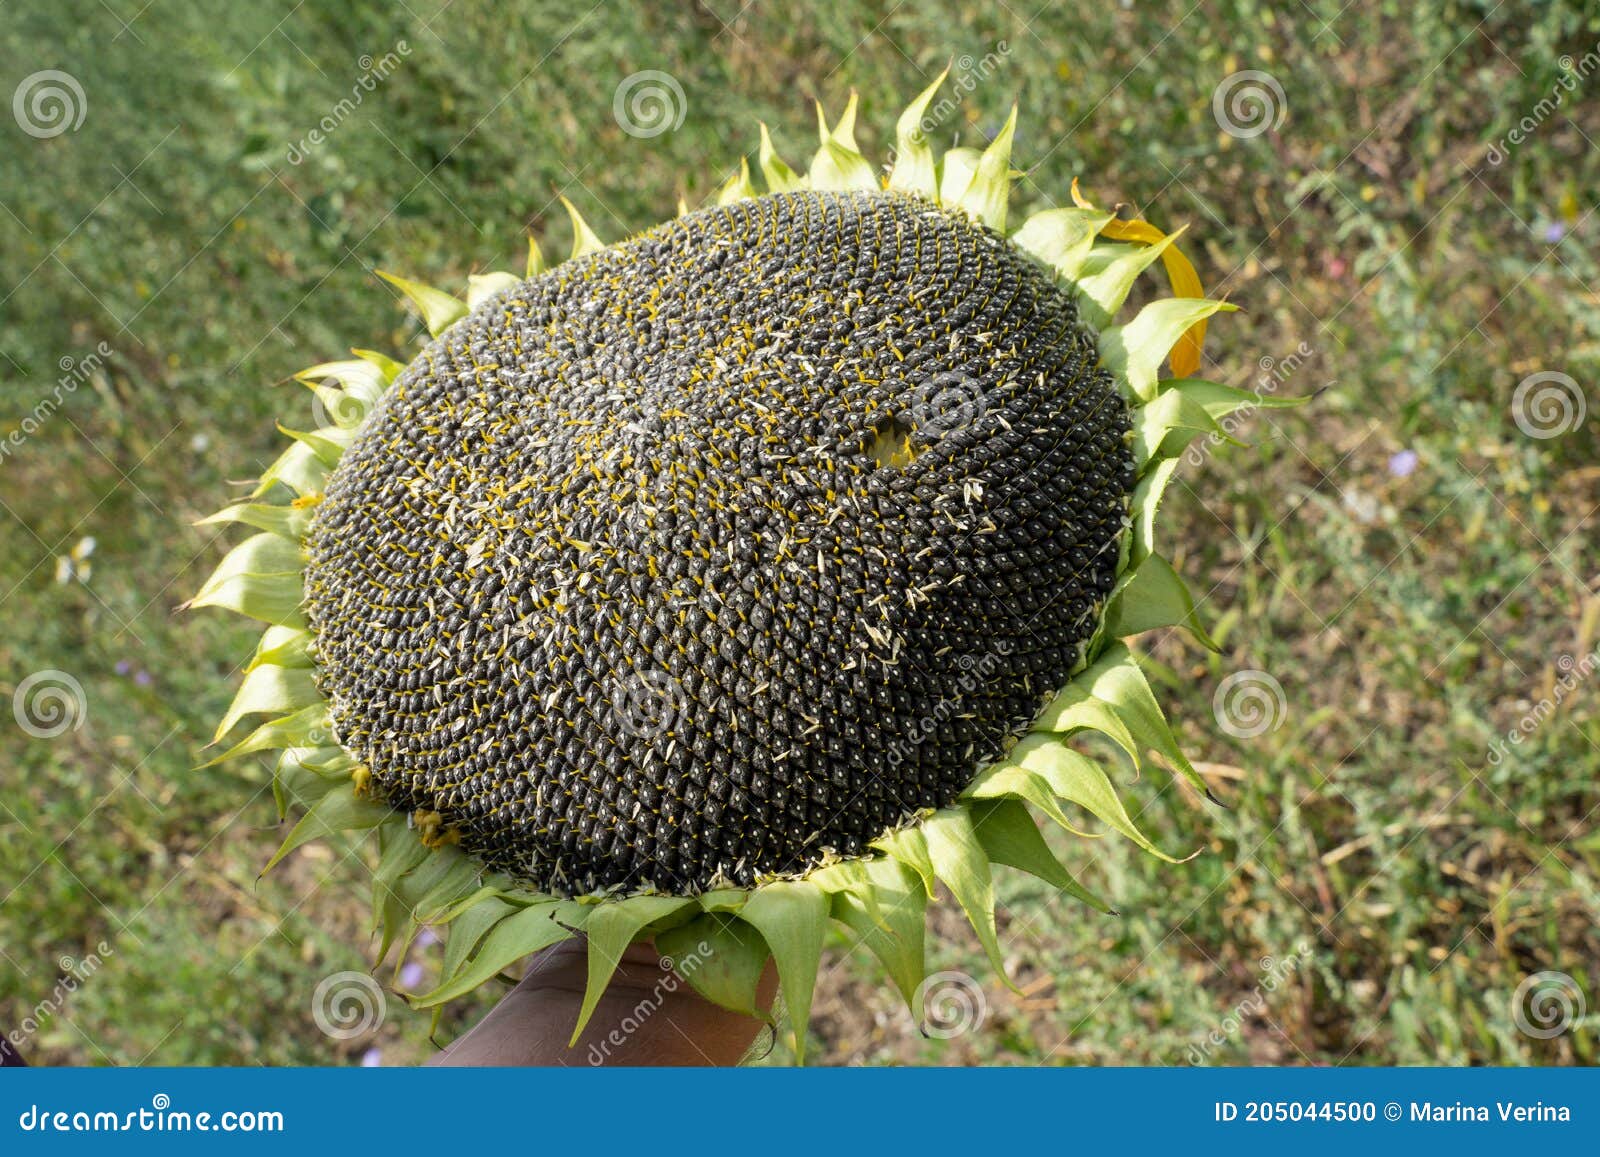 Large Sunflower with Large Black Seeds Stock Photo - Image of closeup ...